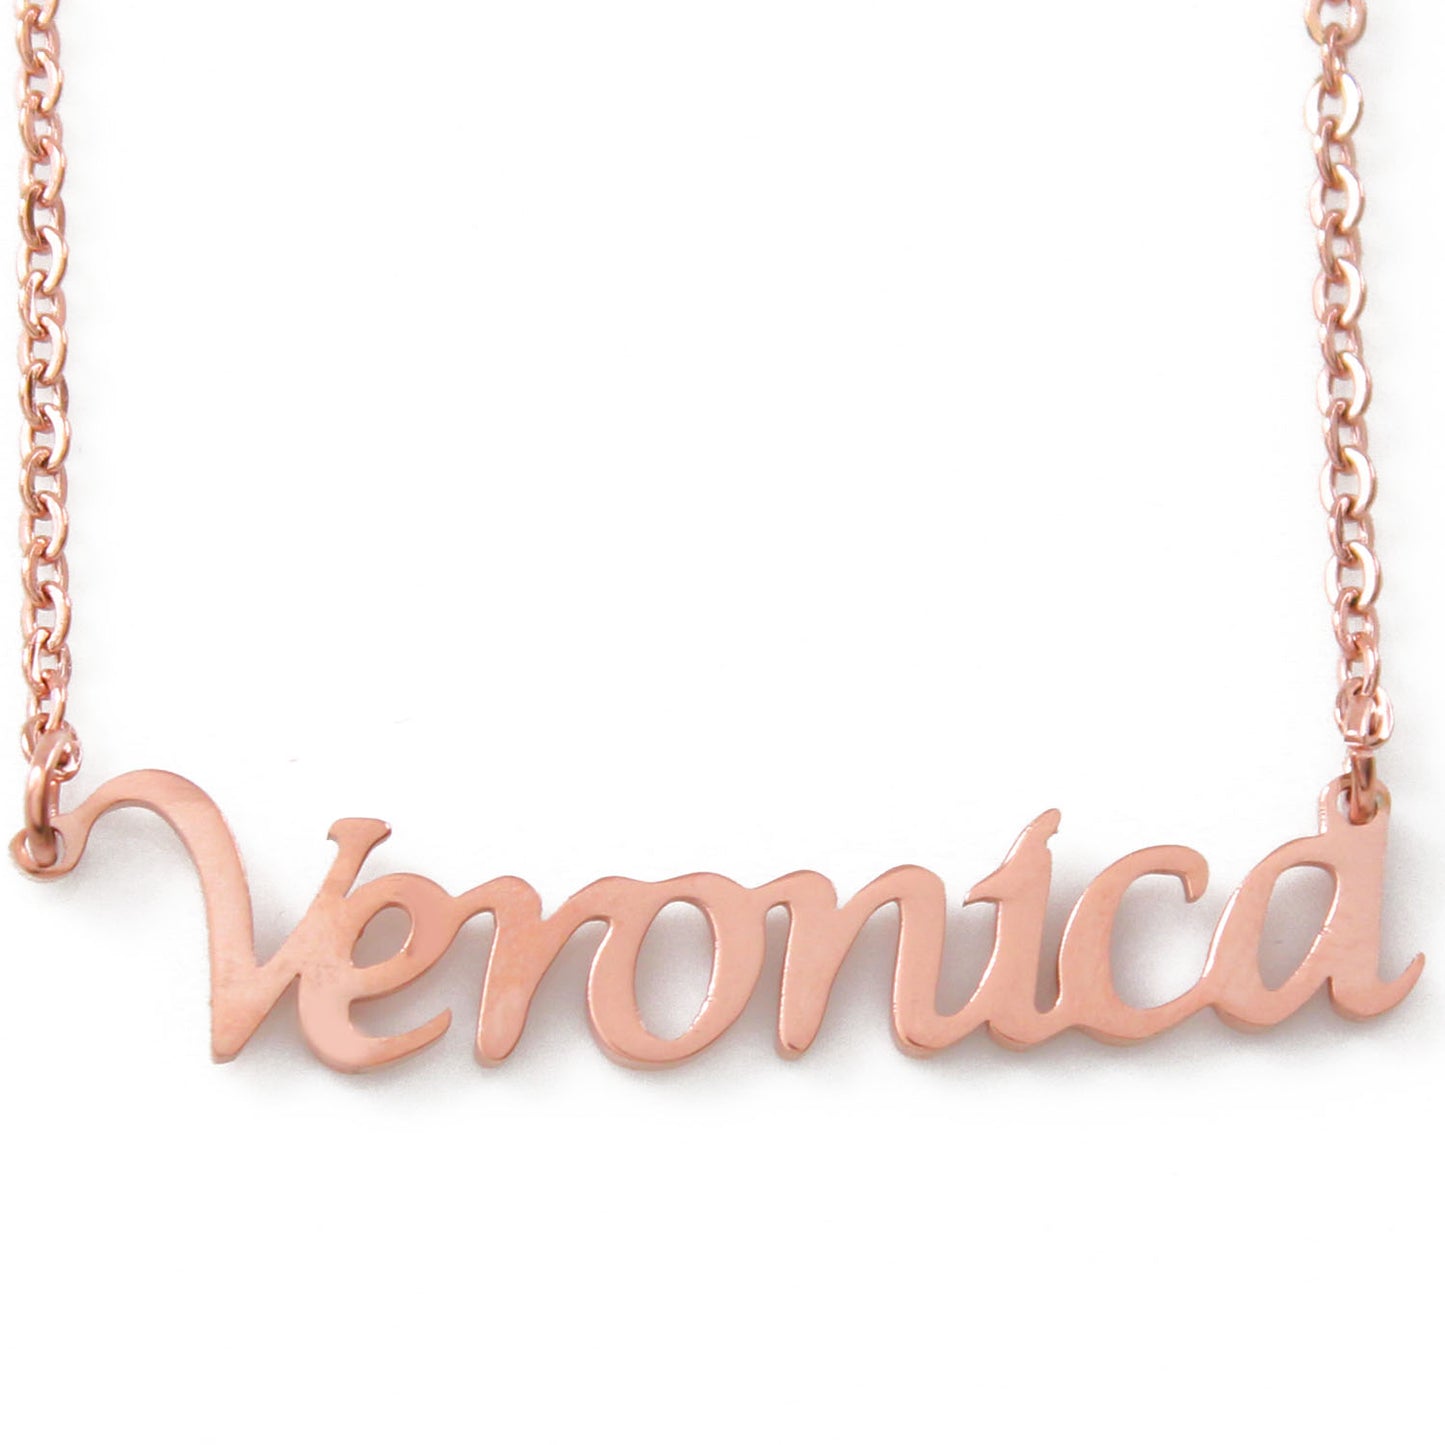 Veronica Name Necklace